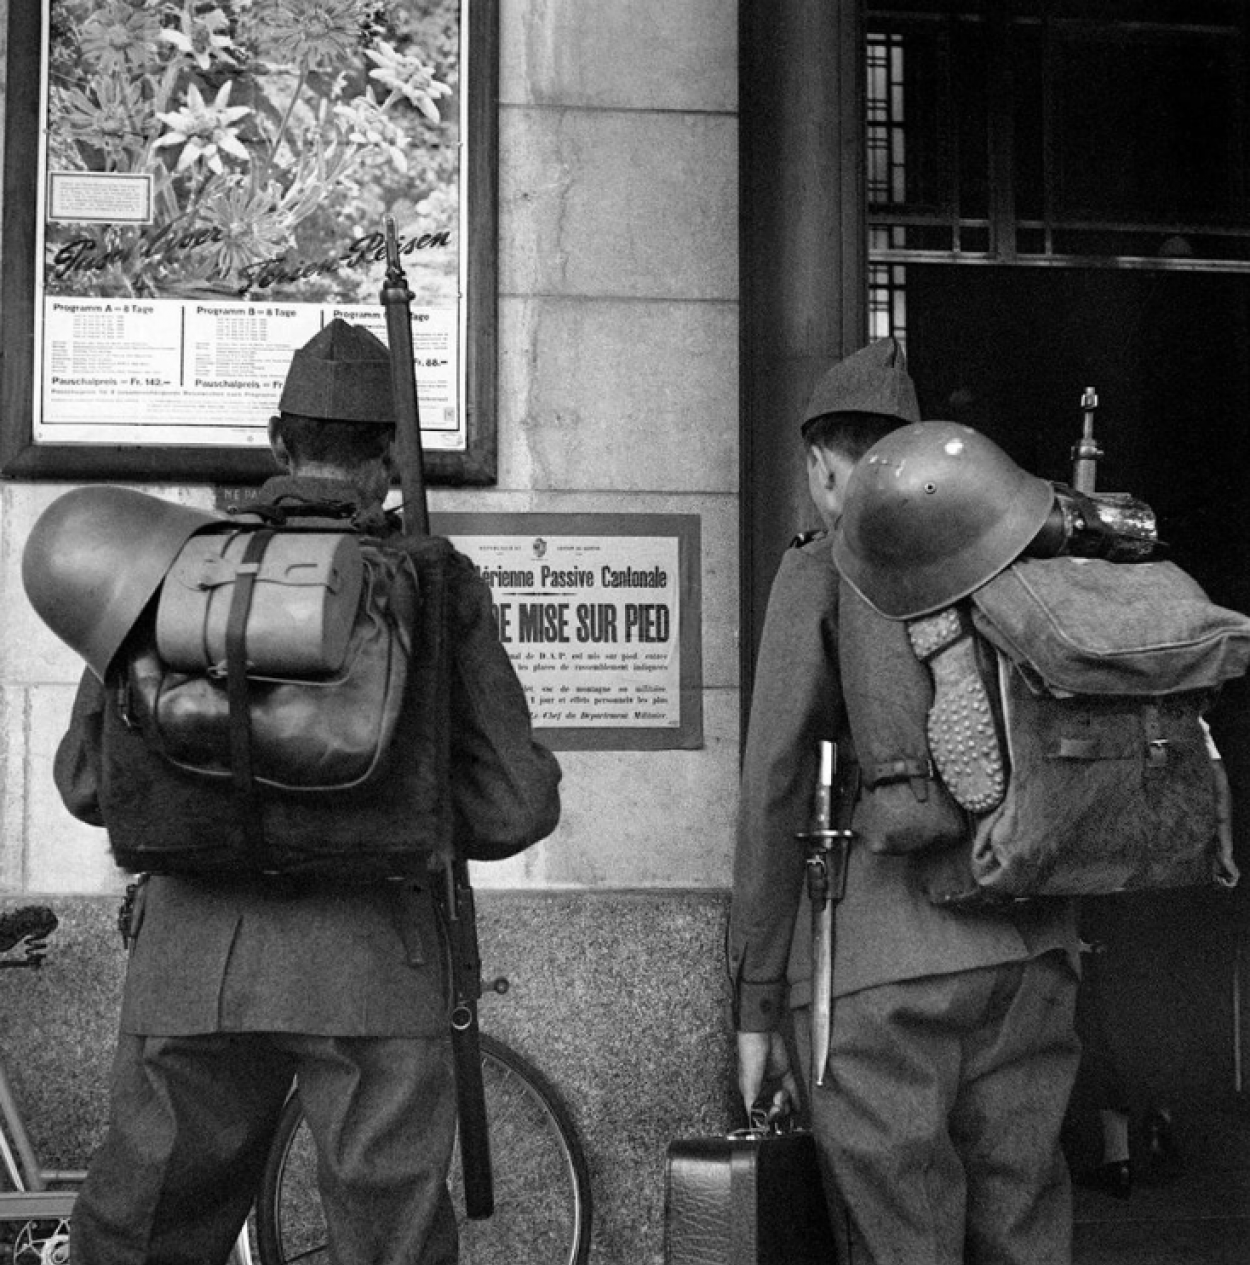 soldats-entrant-en-service-en-1939-A-la-gare-de-genAve-A-keystonephotopress-.png